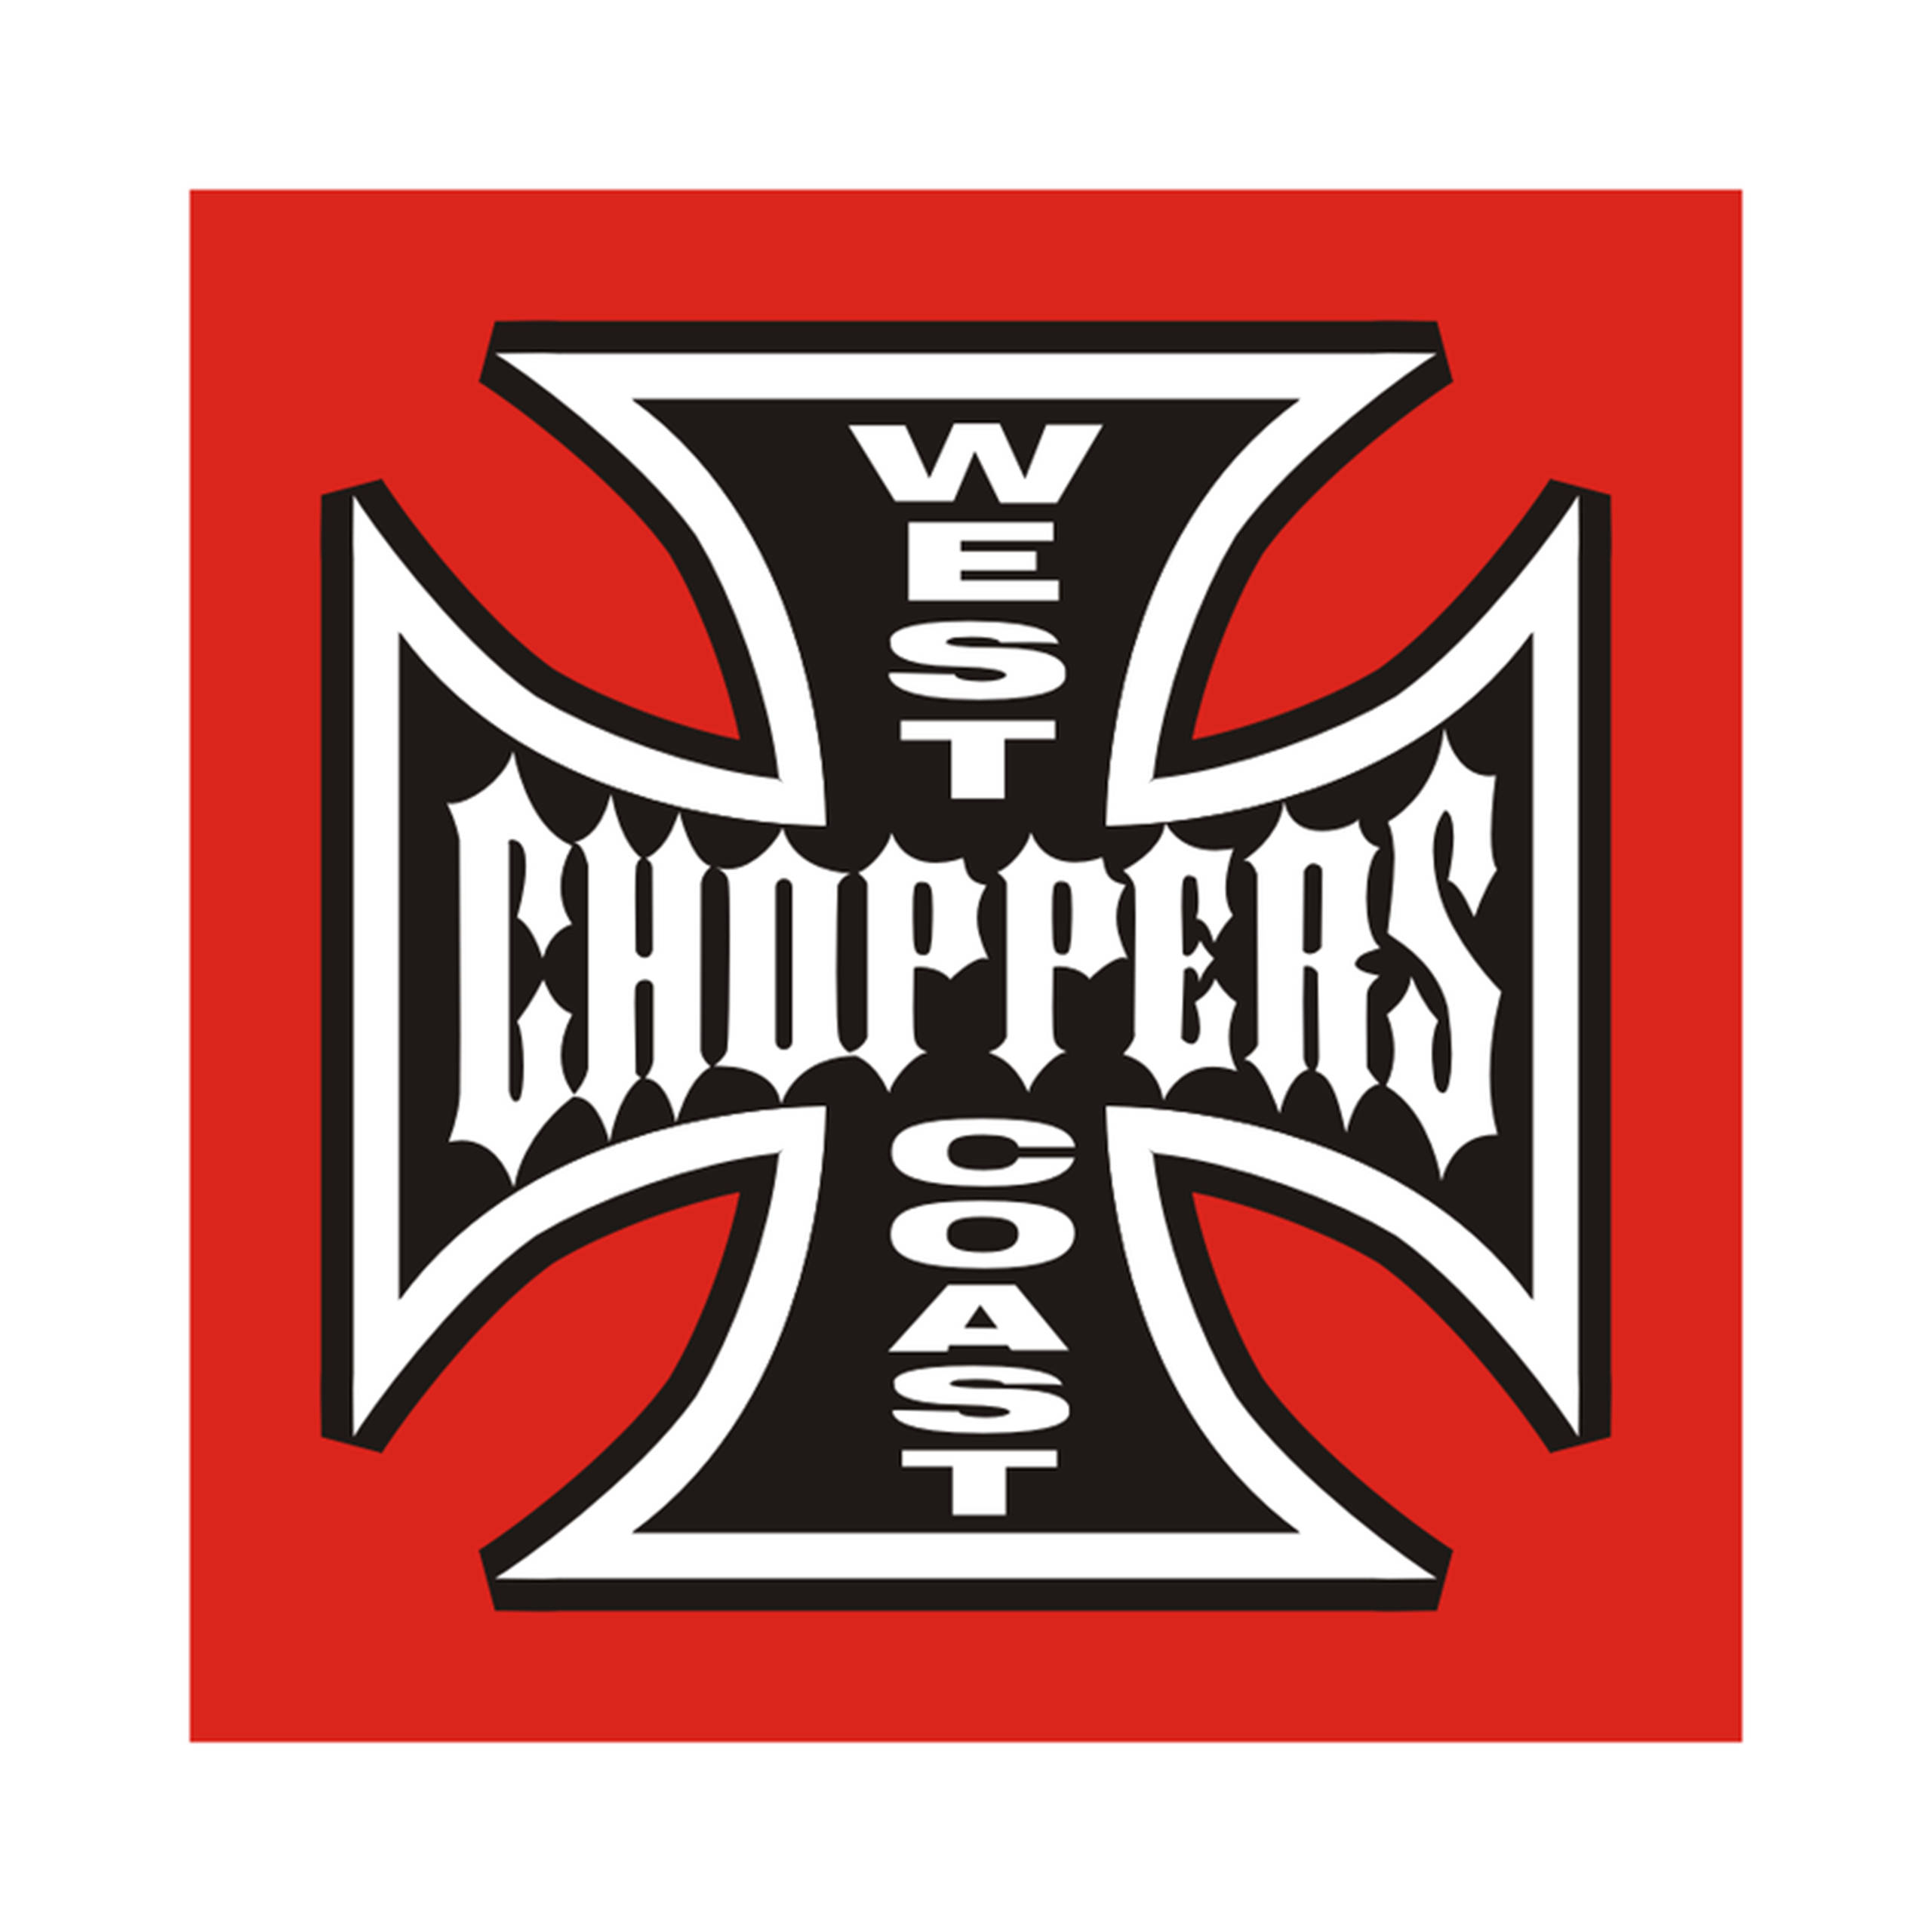 West Coast Choppers Emblem Background